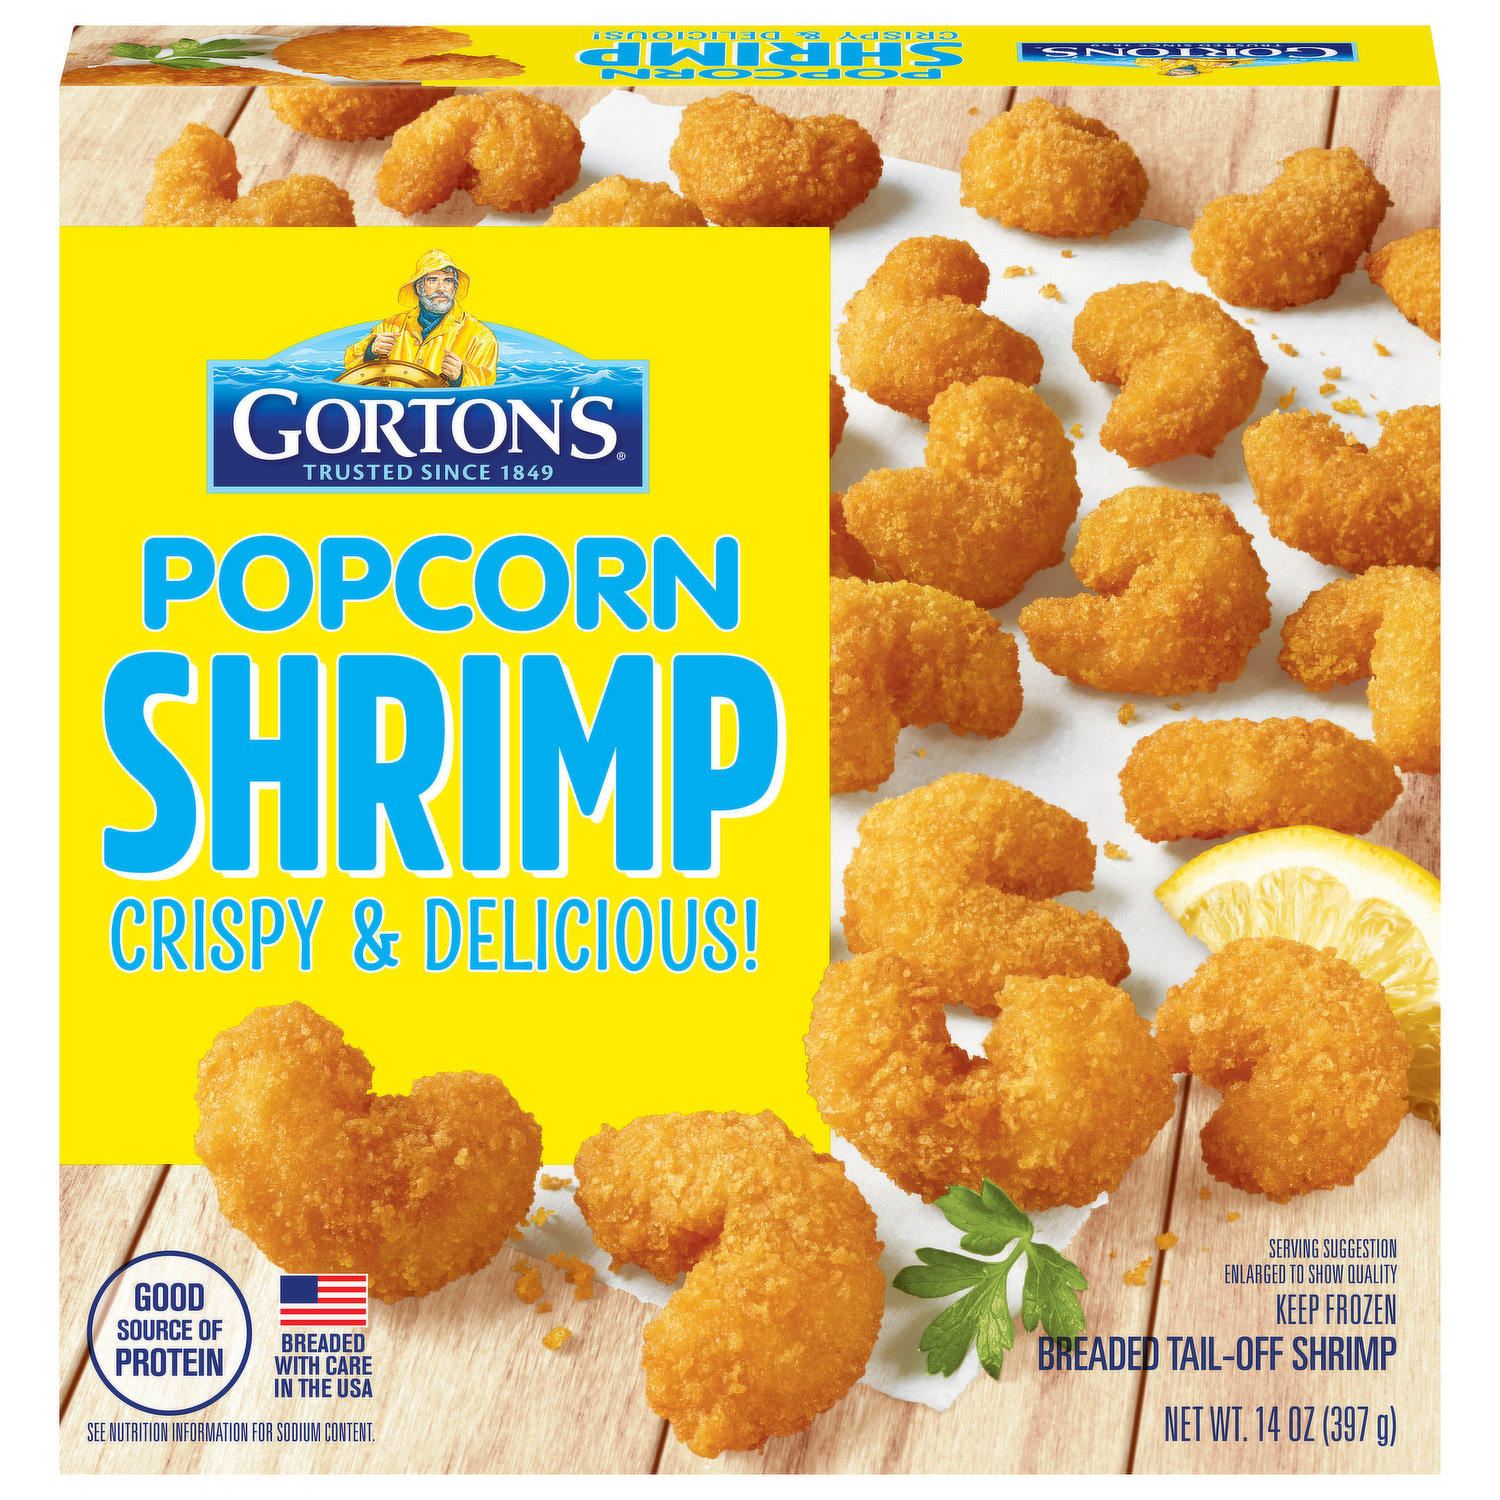 SeaPak Jumbo Popcorn Shrimp (2.5 lbs.)